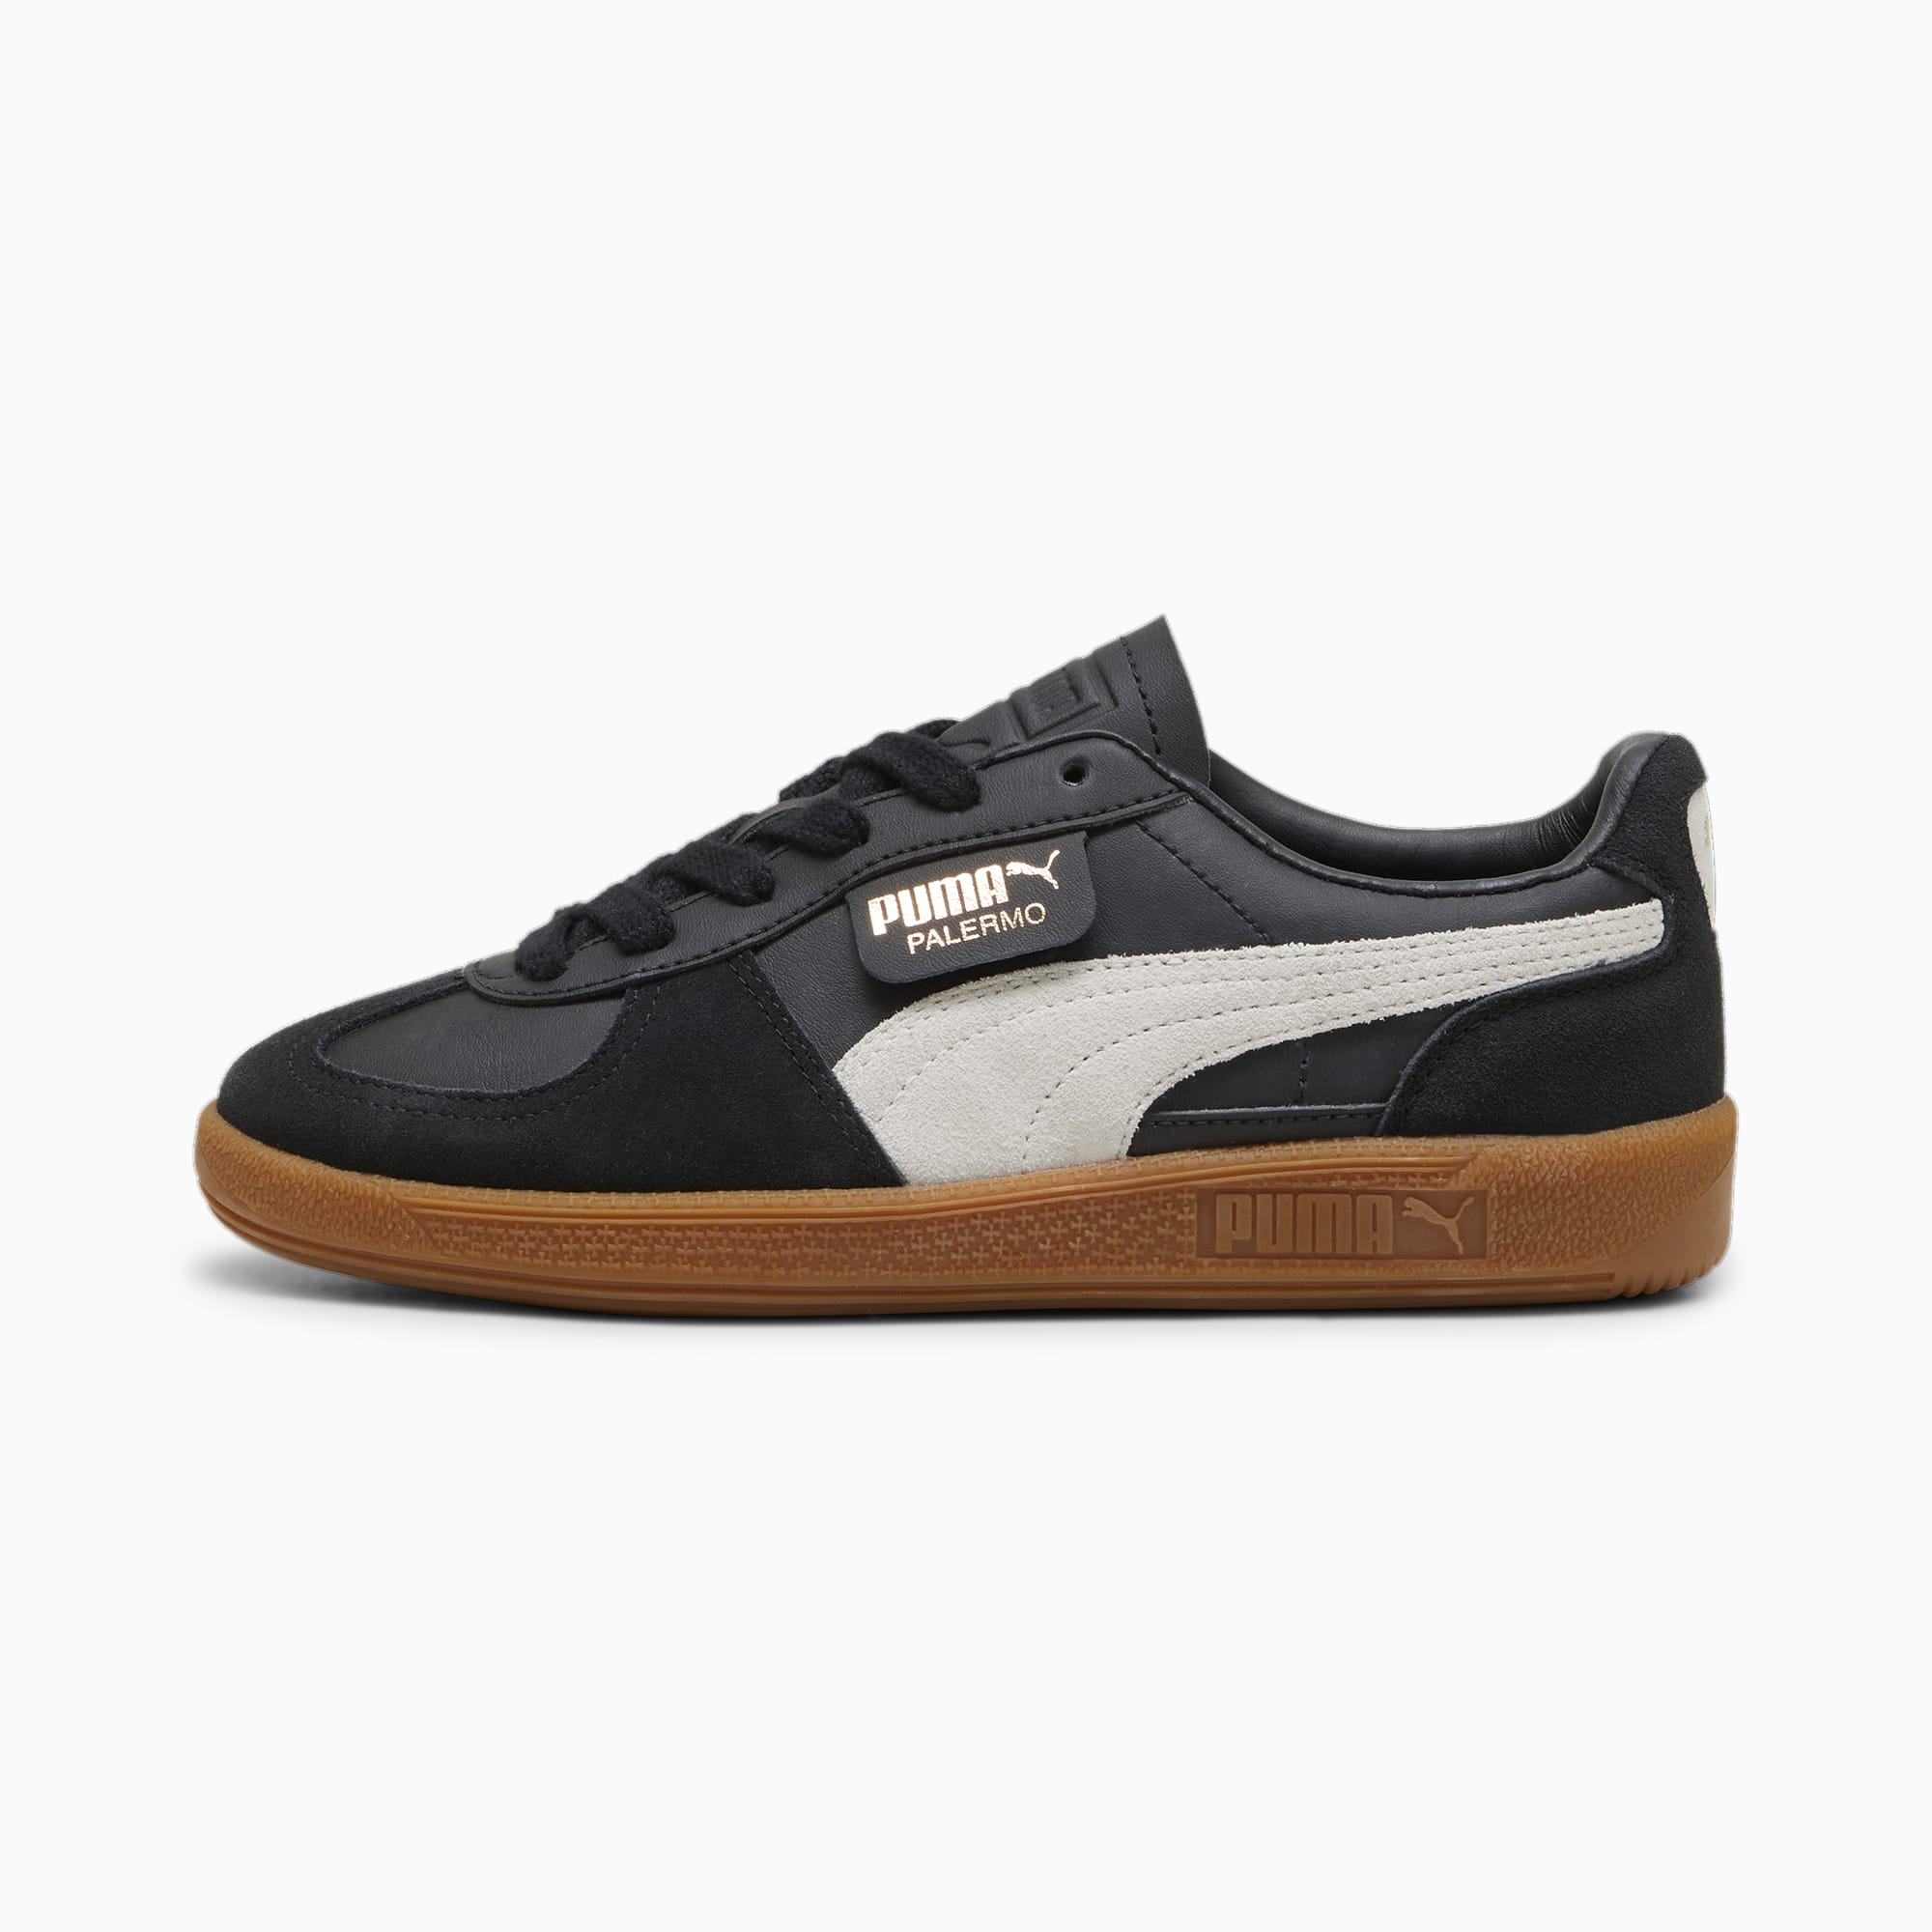 PUMA Palermo Lth Sneakers Teenager Schuhe, Schwarz/Grau, Größe: 35.5, Schuhe